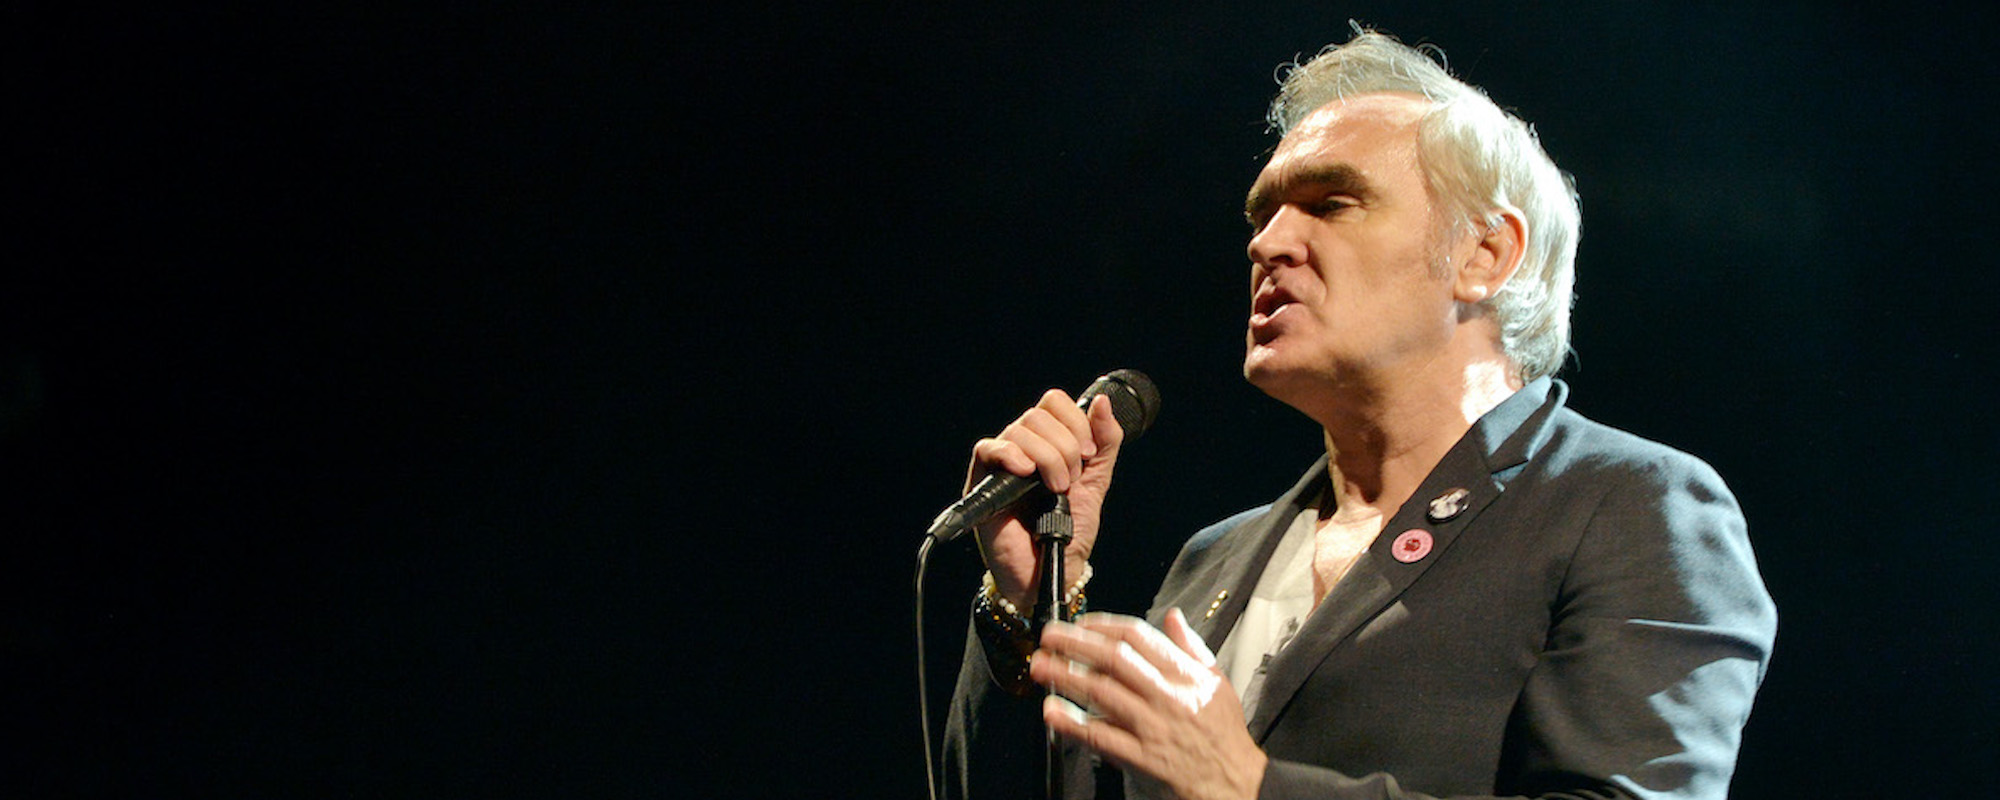 Morrissey No Longer Releasing ‘Bonfire of Teenagers’ in February